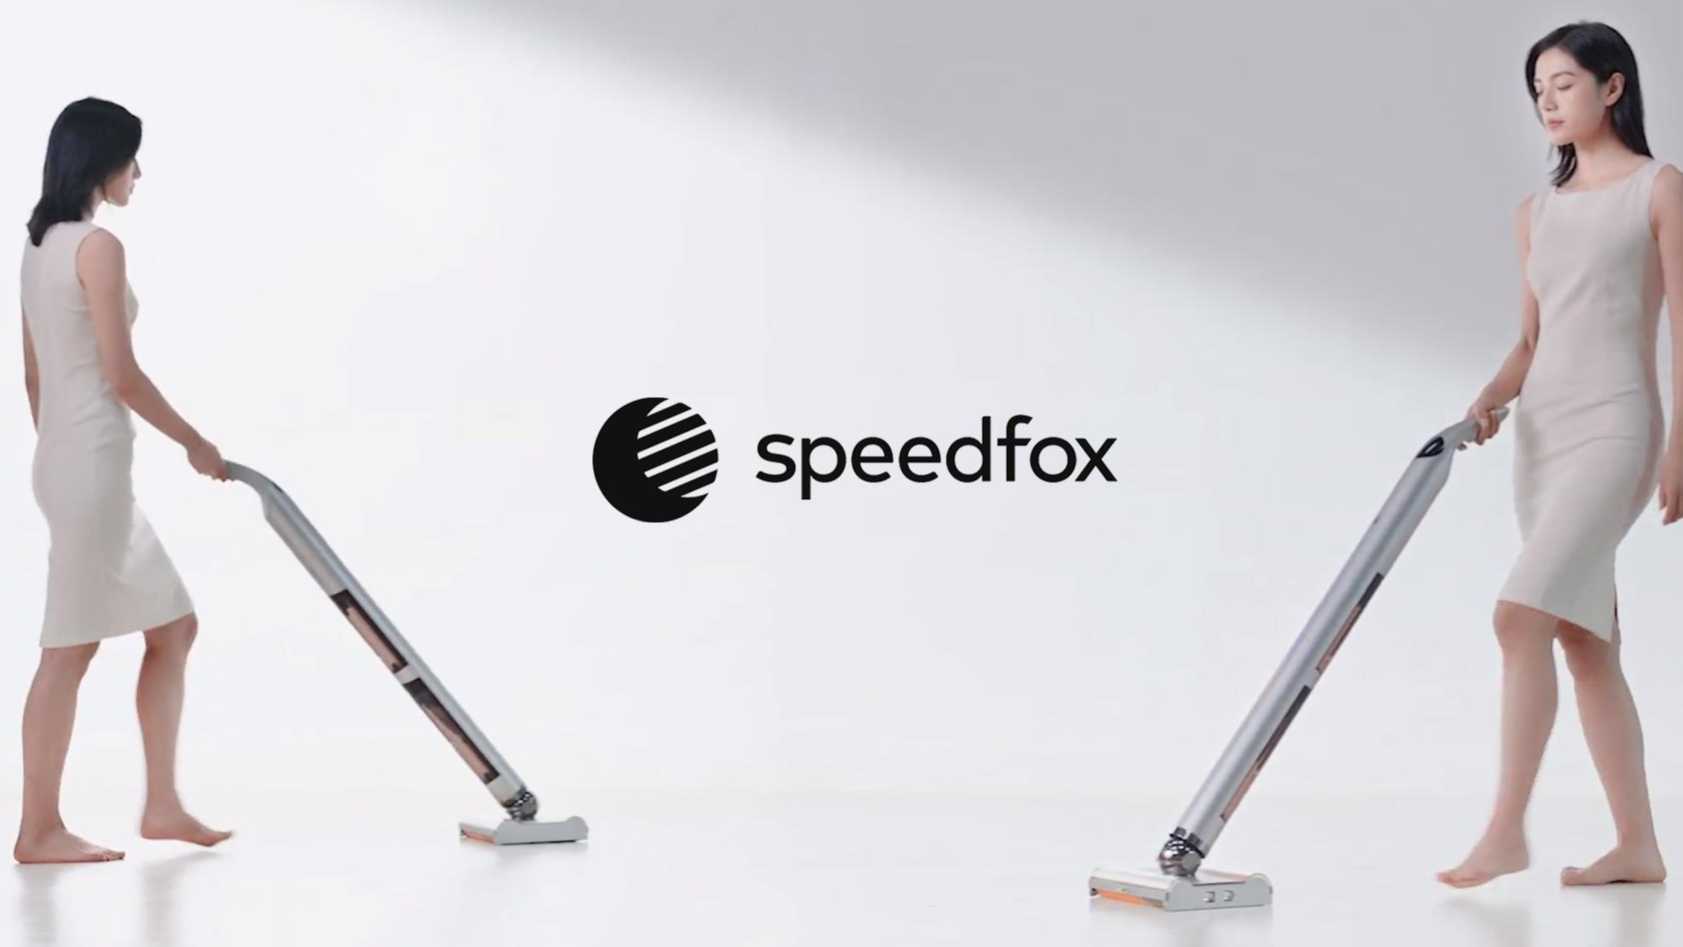 inDare 出品：「 追光 」 Speedfox Zen首款双向洗地机视觉创意